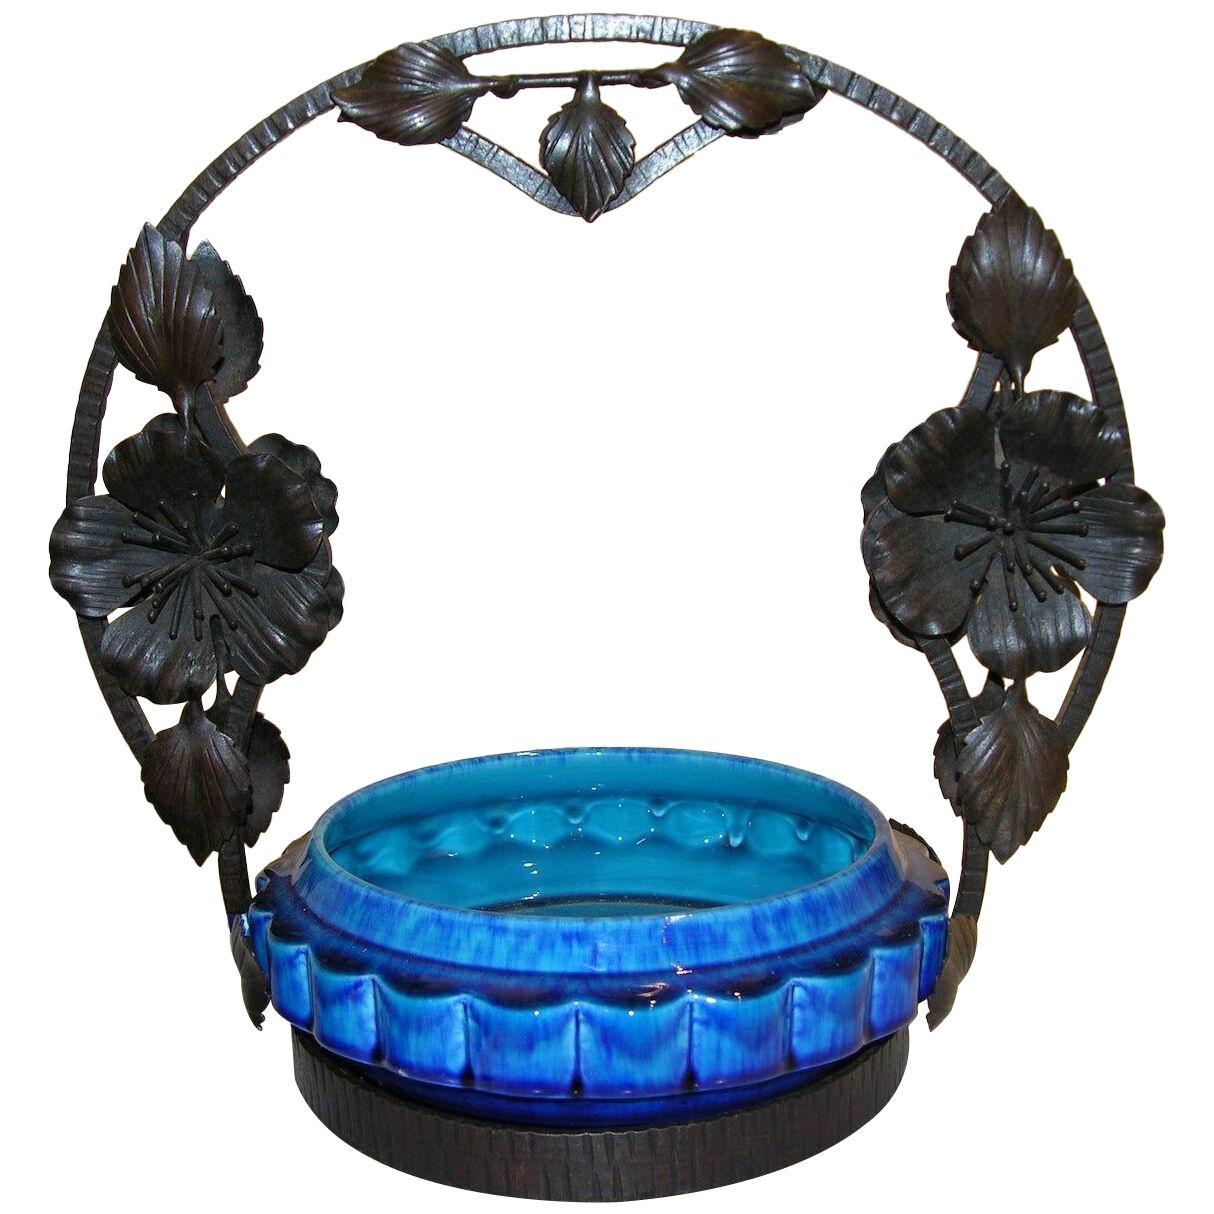 French Art Nouveau Paul Milet Sevres Ceramic Flower Wrought Iron Turquoise Bowl